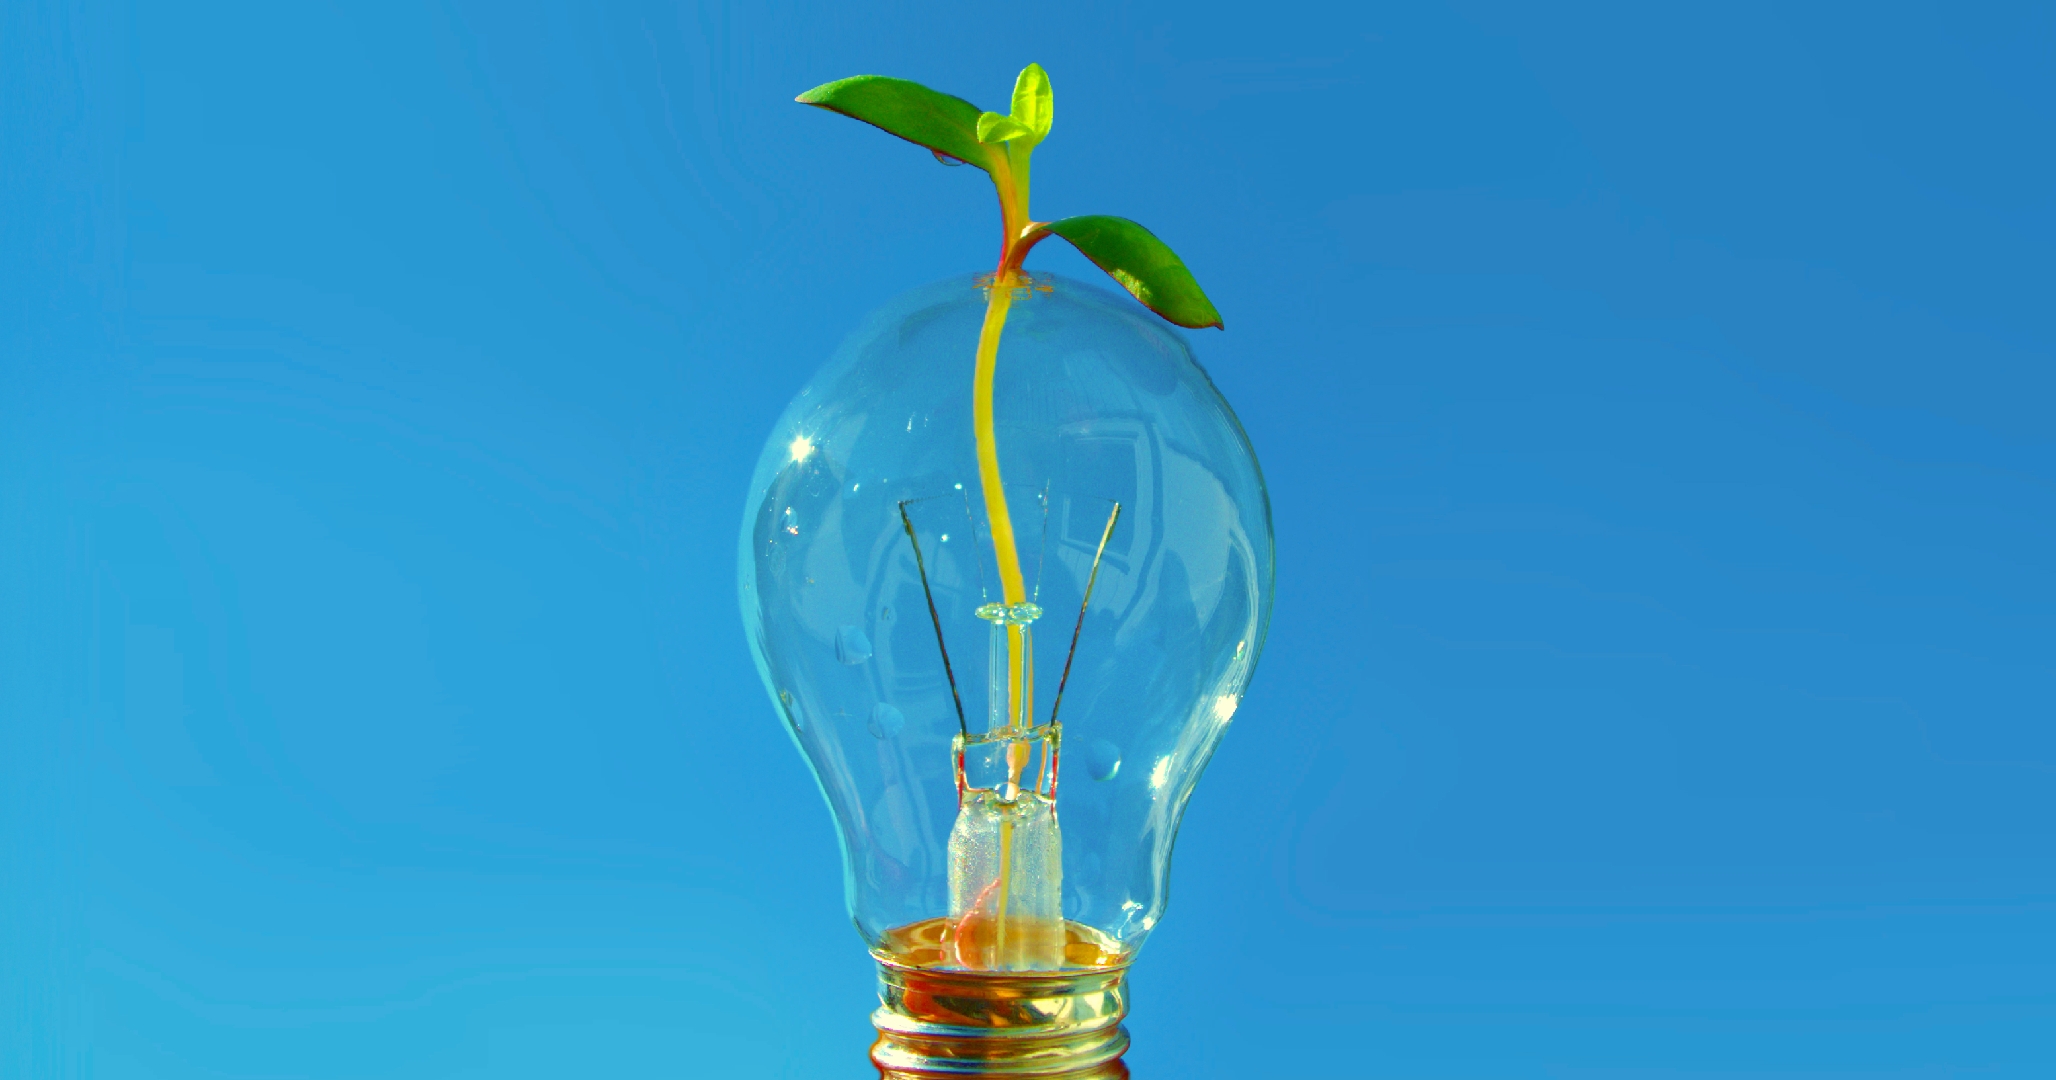 Photo of lightbulb with sapling growing inside